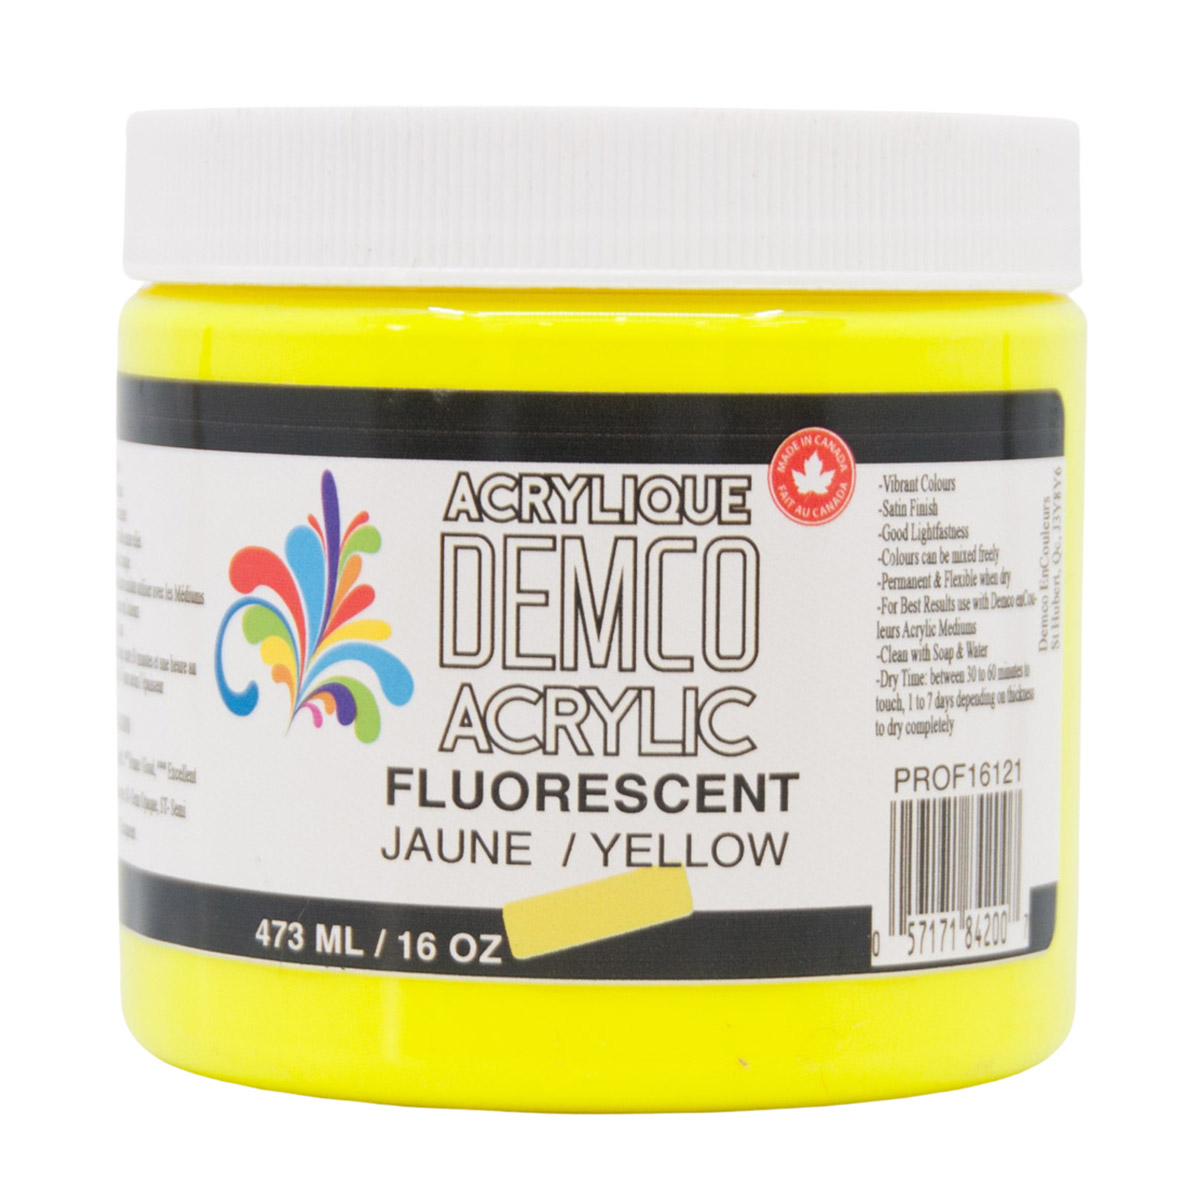 Demco Acrylic Fluorescent Yellow 473ml/16oz